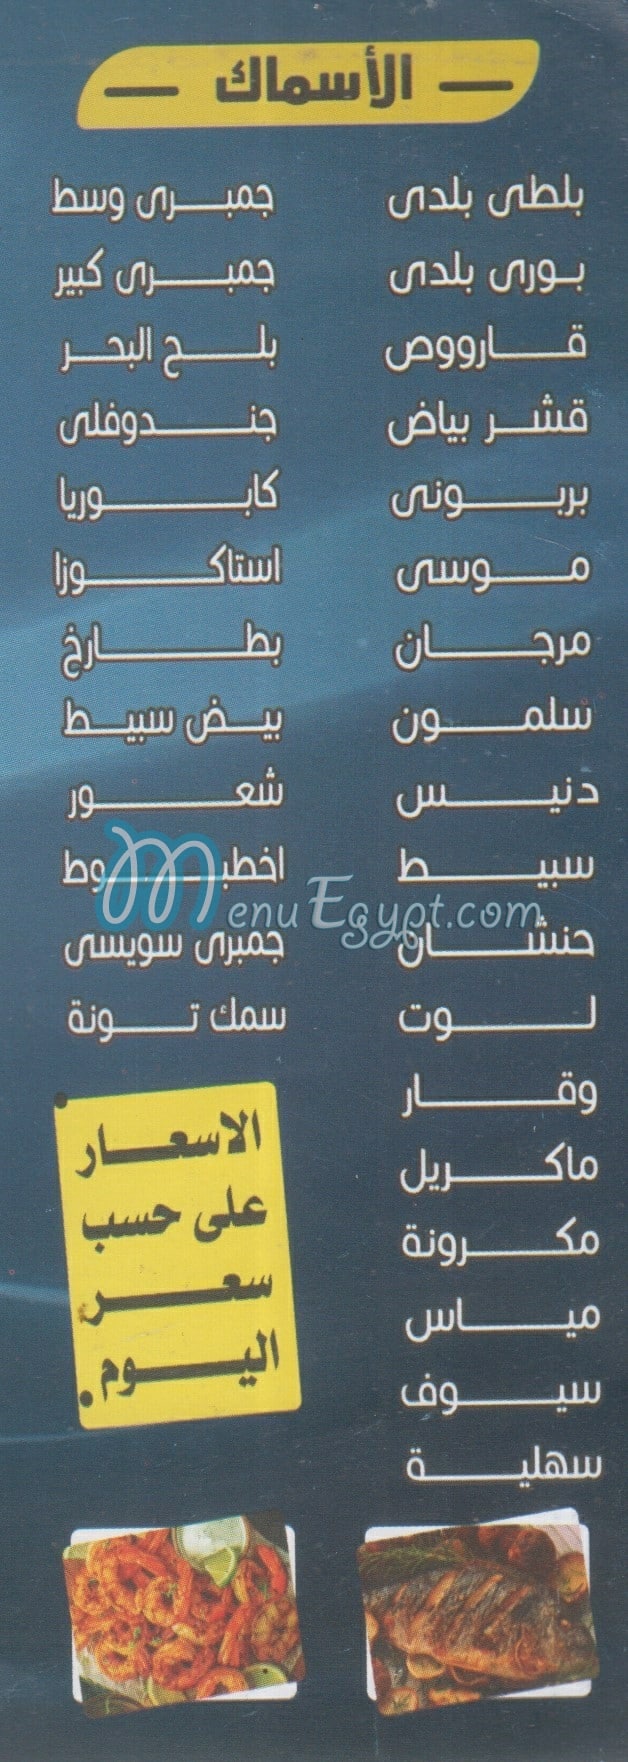 Morgana menu Egypt 1